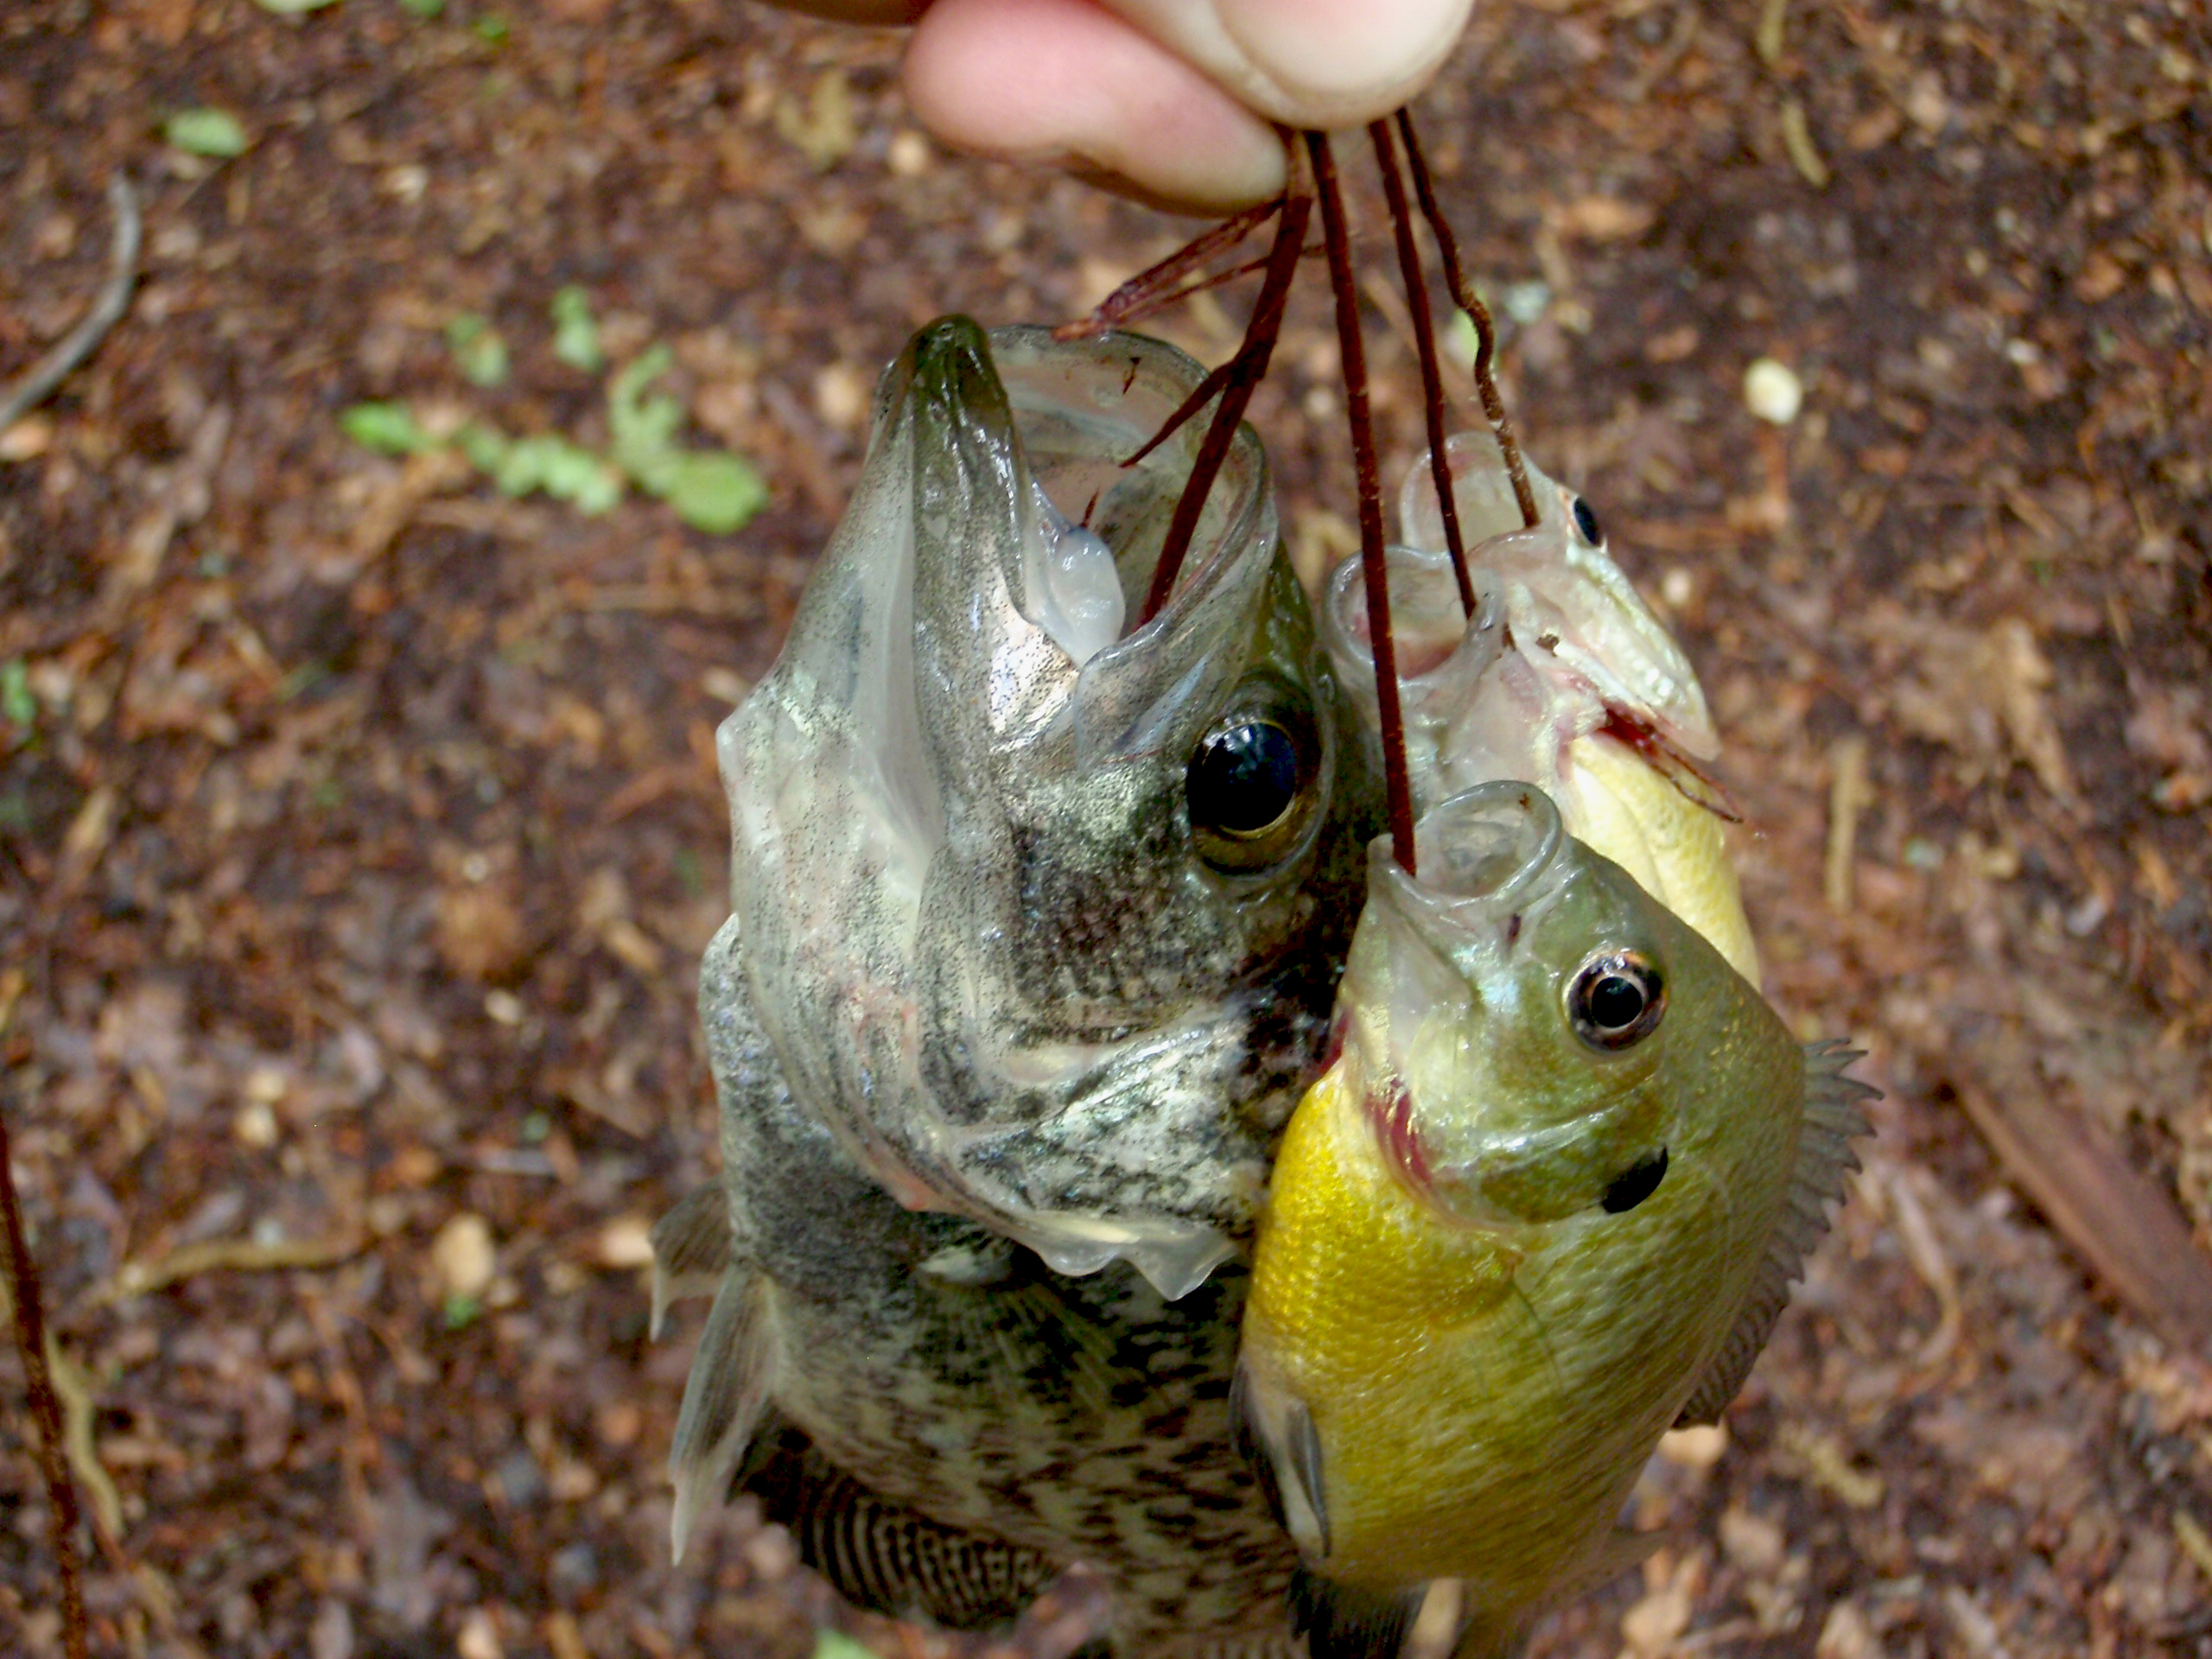 Primitive Survival Fish Trap. (FISH CAUGHT) 